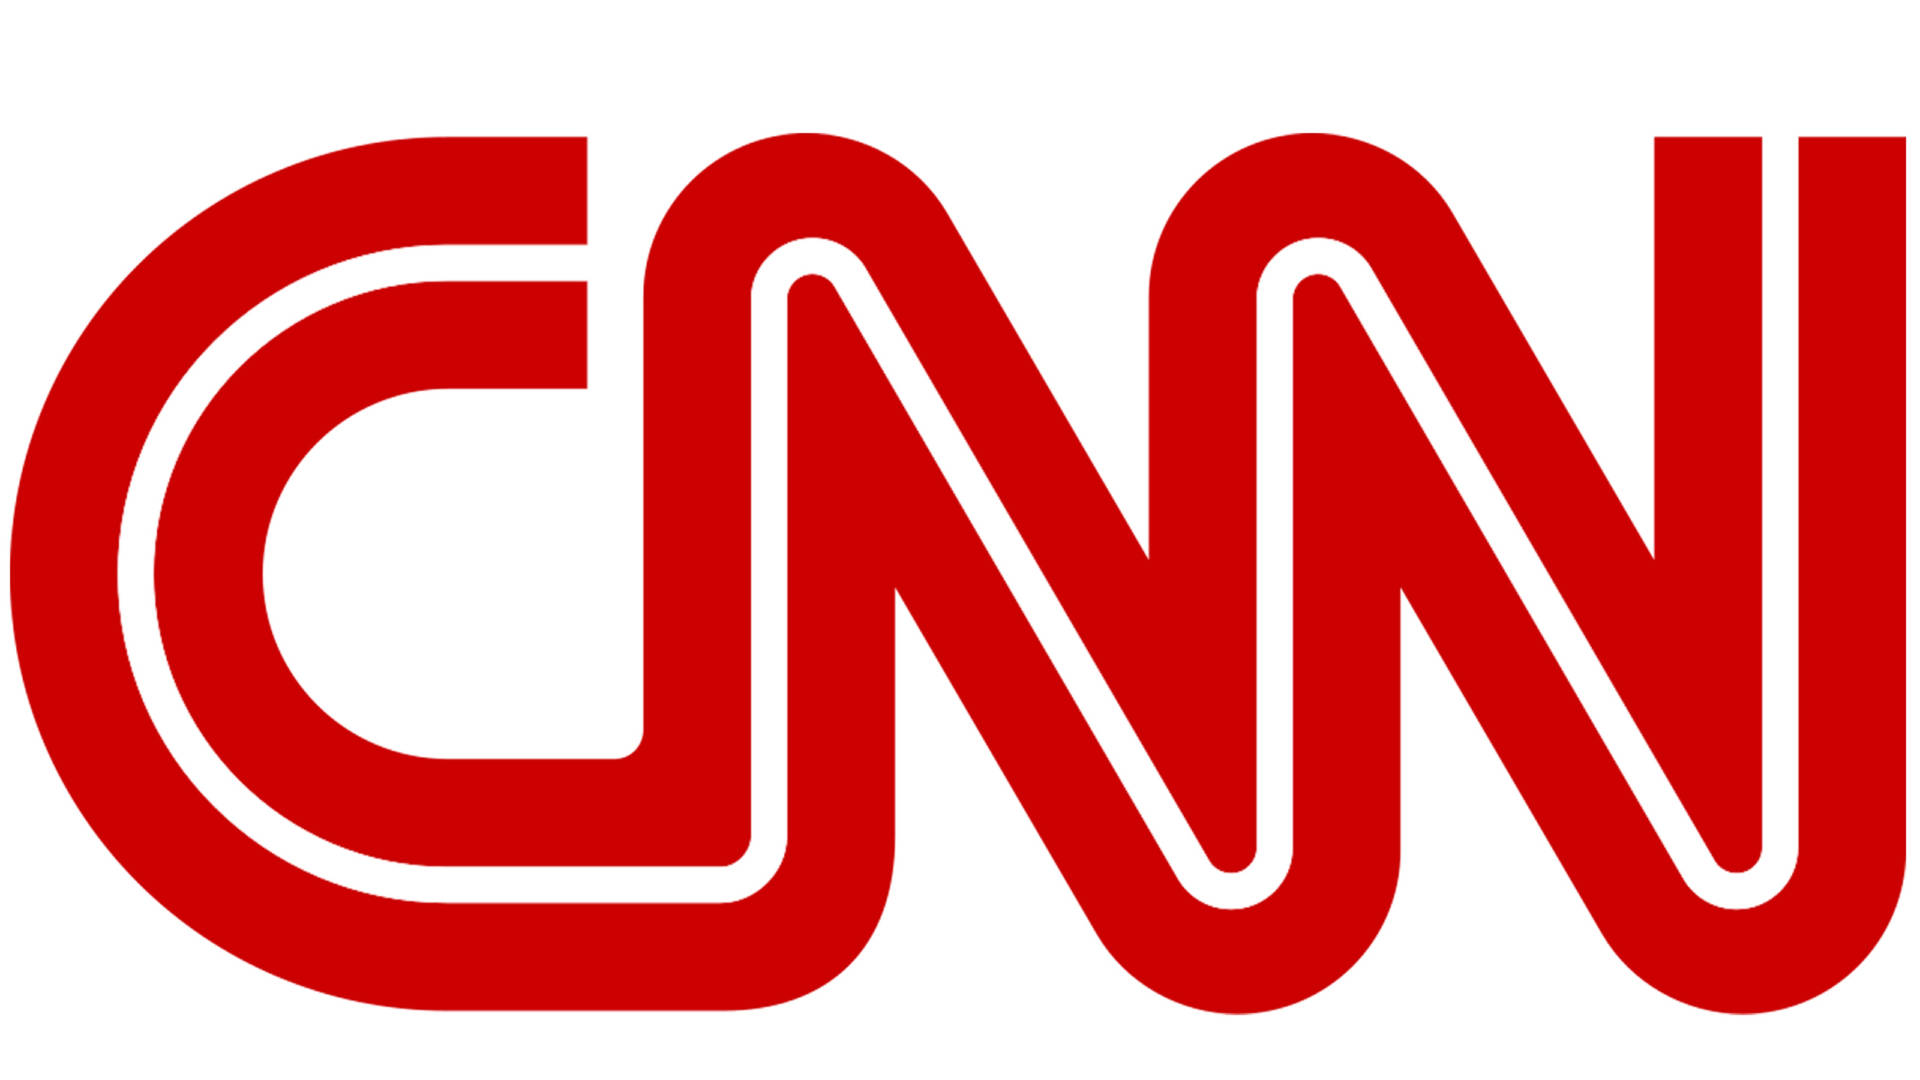 Cnn News Channel Logo